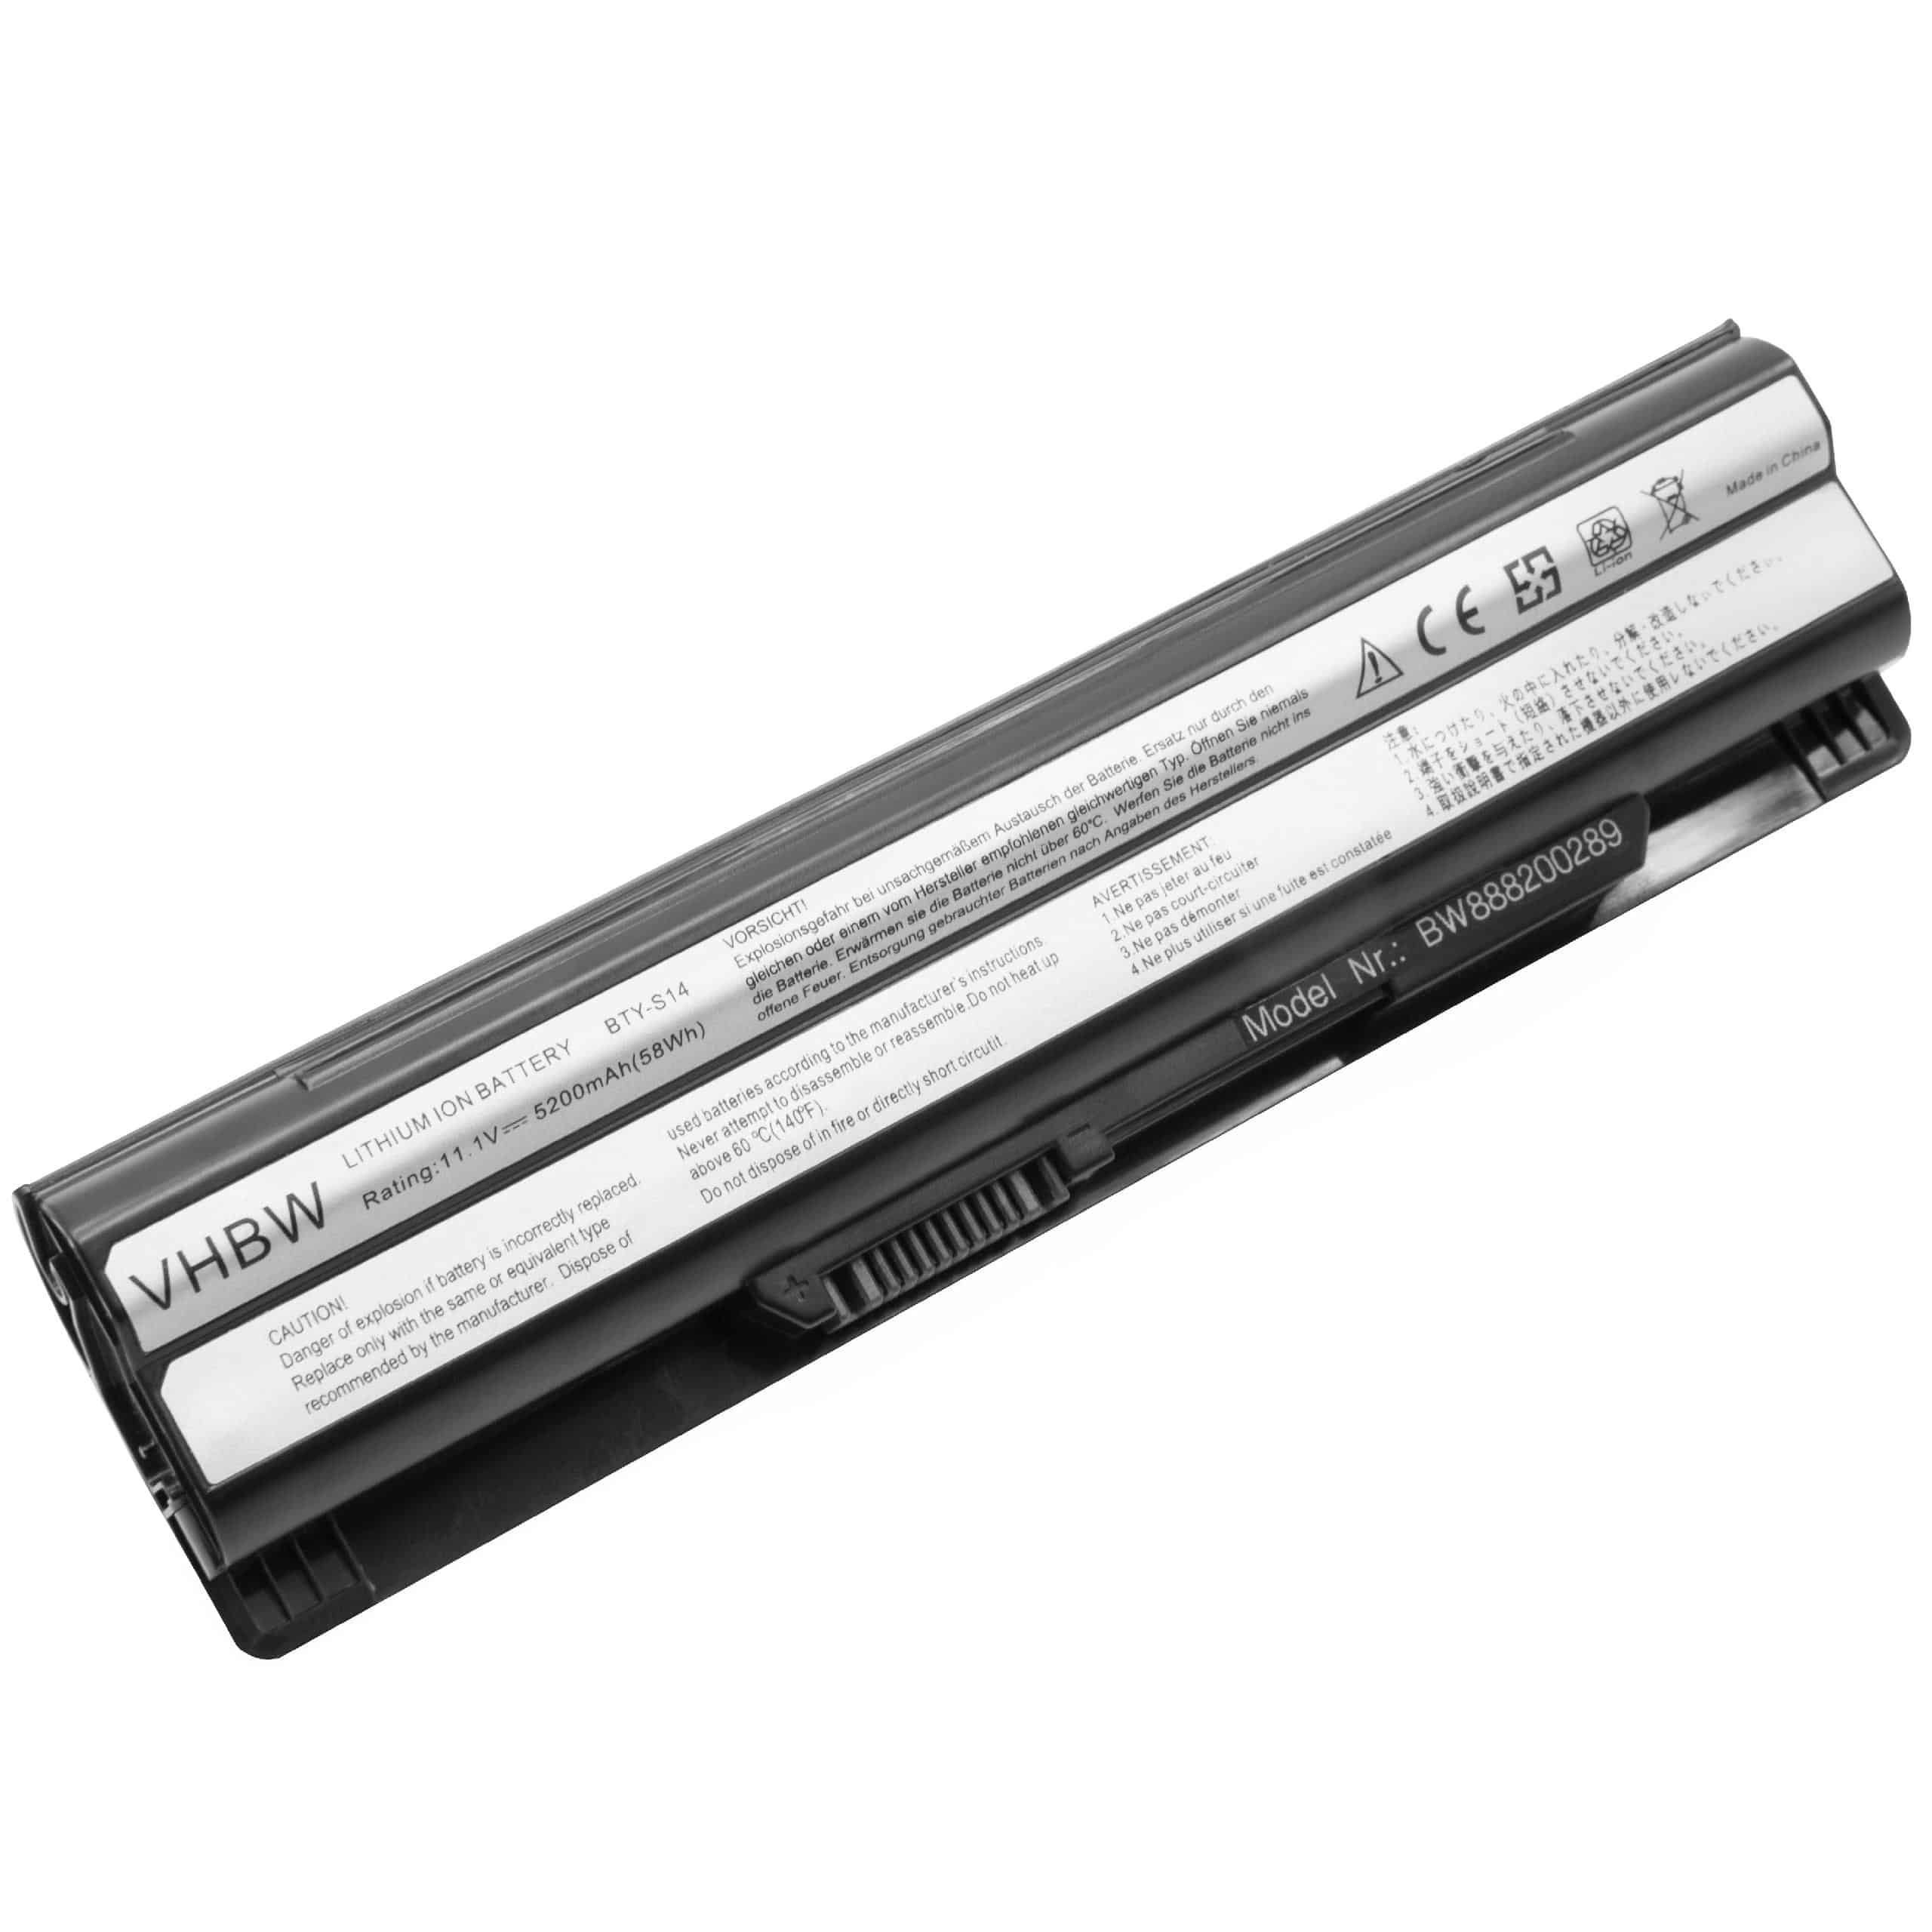 Batería reemplaza Medion 40029150, 40029231, 40029683 para notebook MSI - 5200 mAh 11,1 V Li-Ion negro